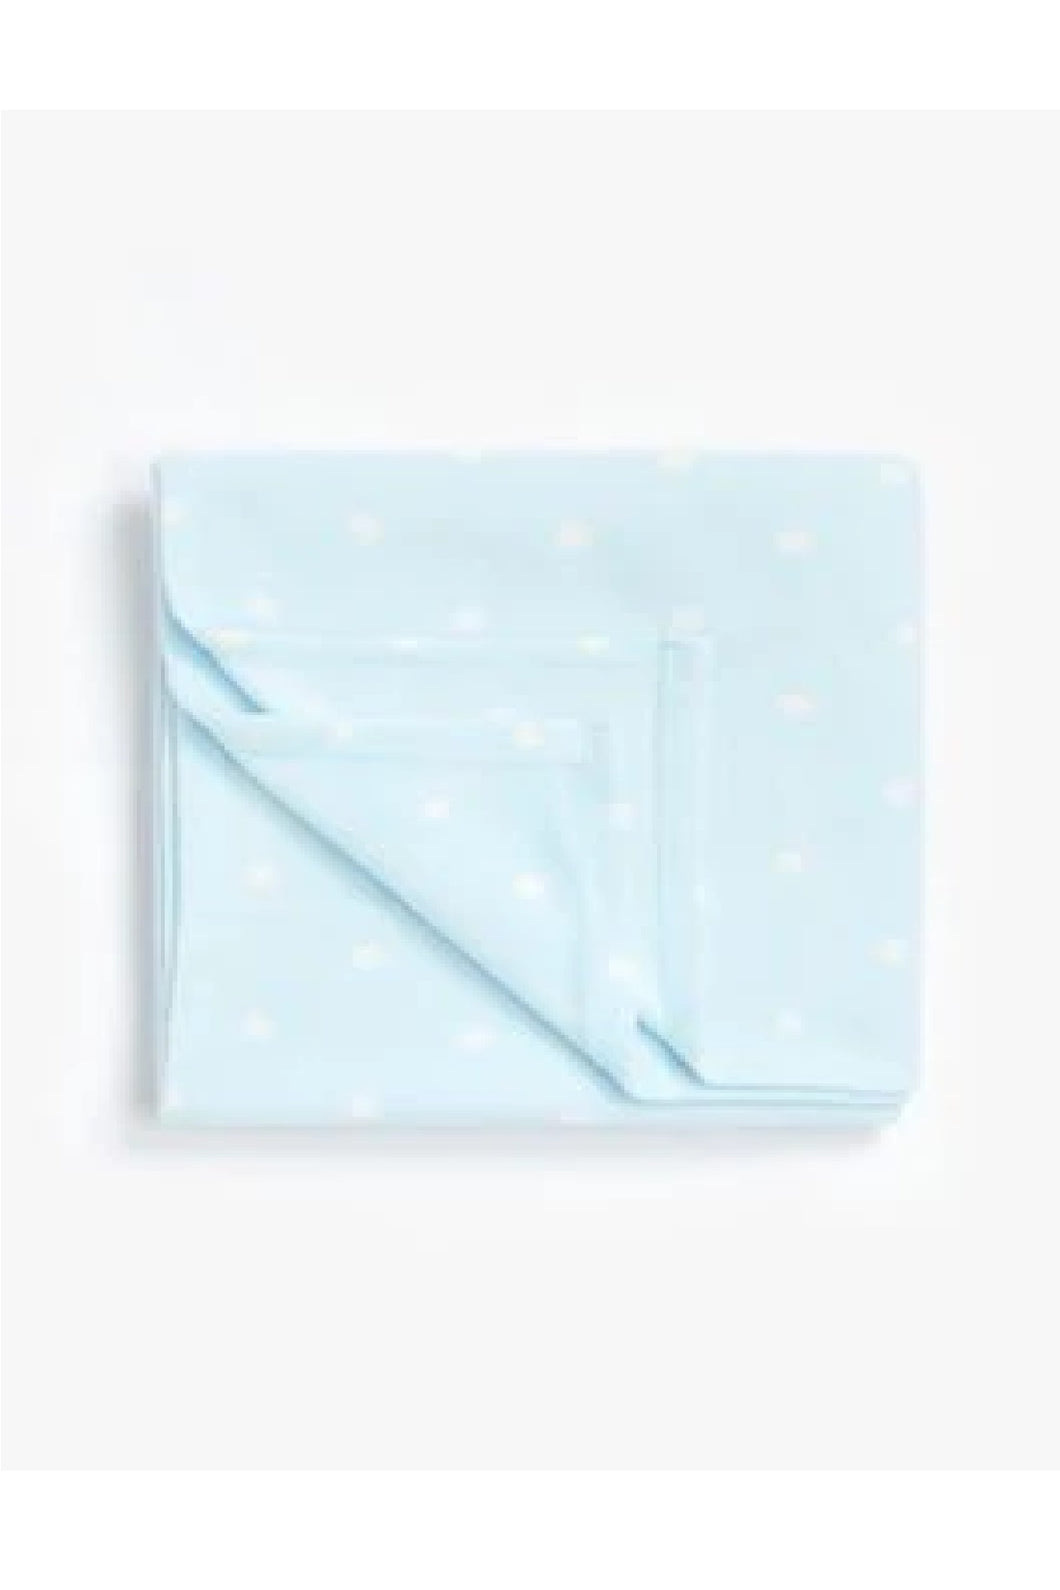 Mothercare Cot Or Cot Bed Fleece Blanket Blue Dot 1